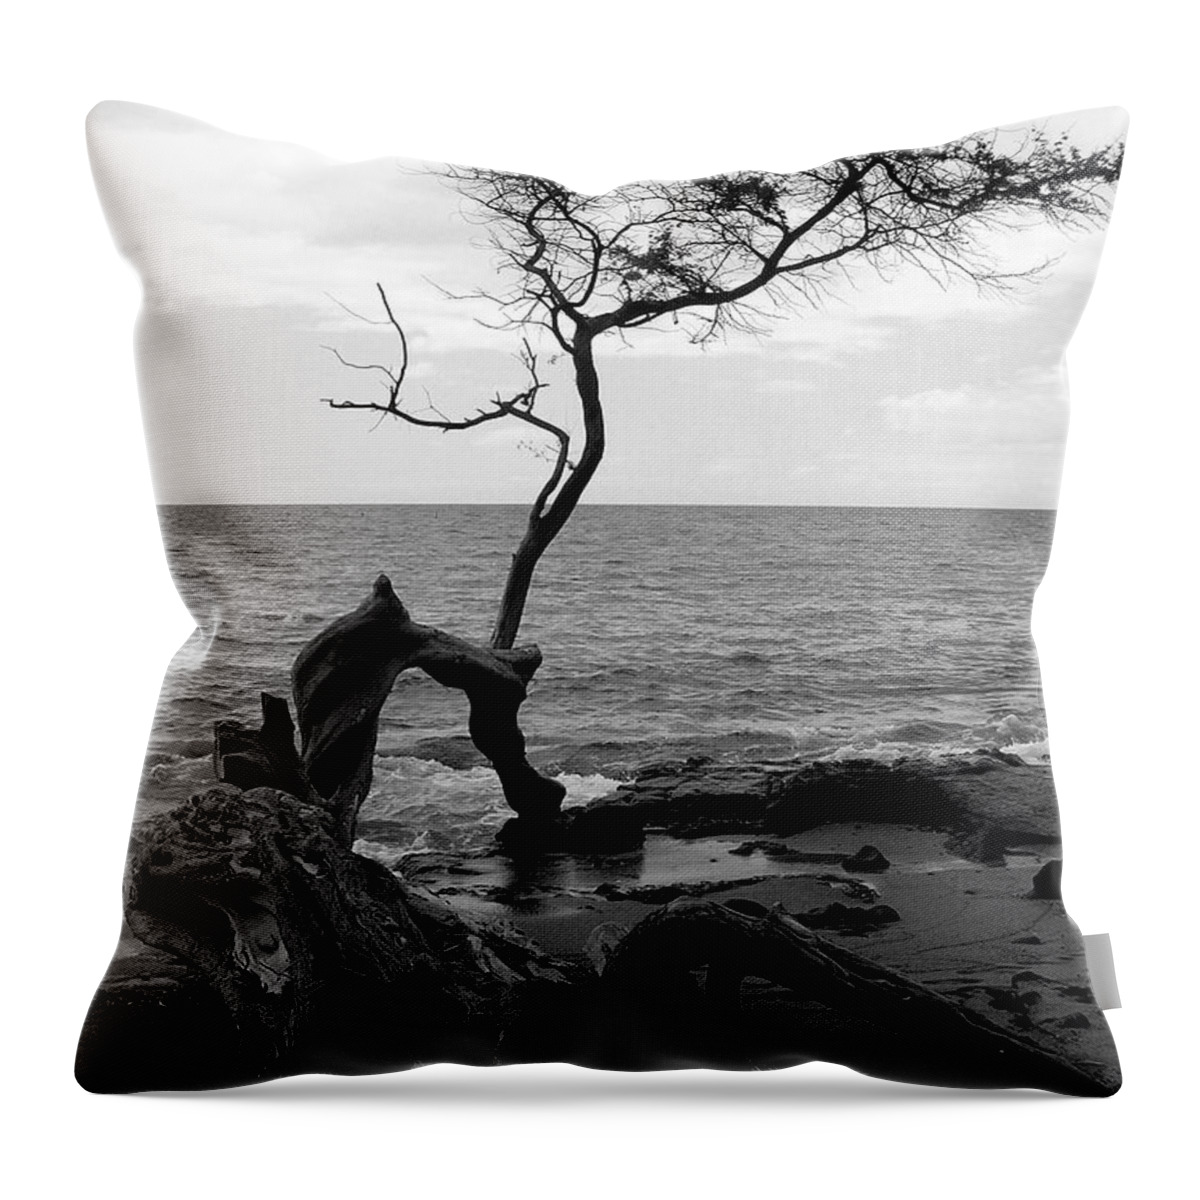 Kona Coast Throw Pillow featuring the photograph Kona Coast Tree by Pat Moore